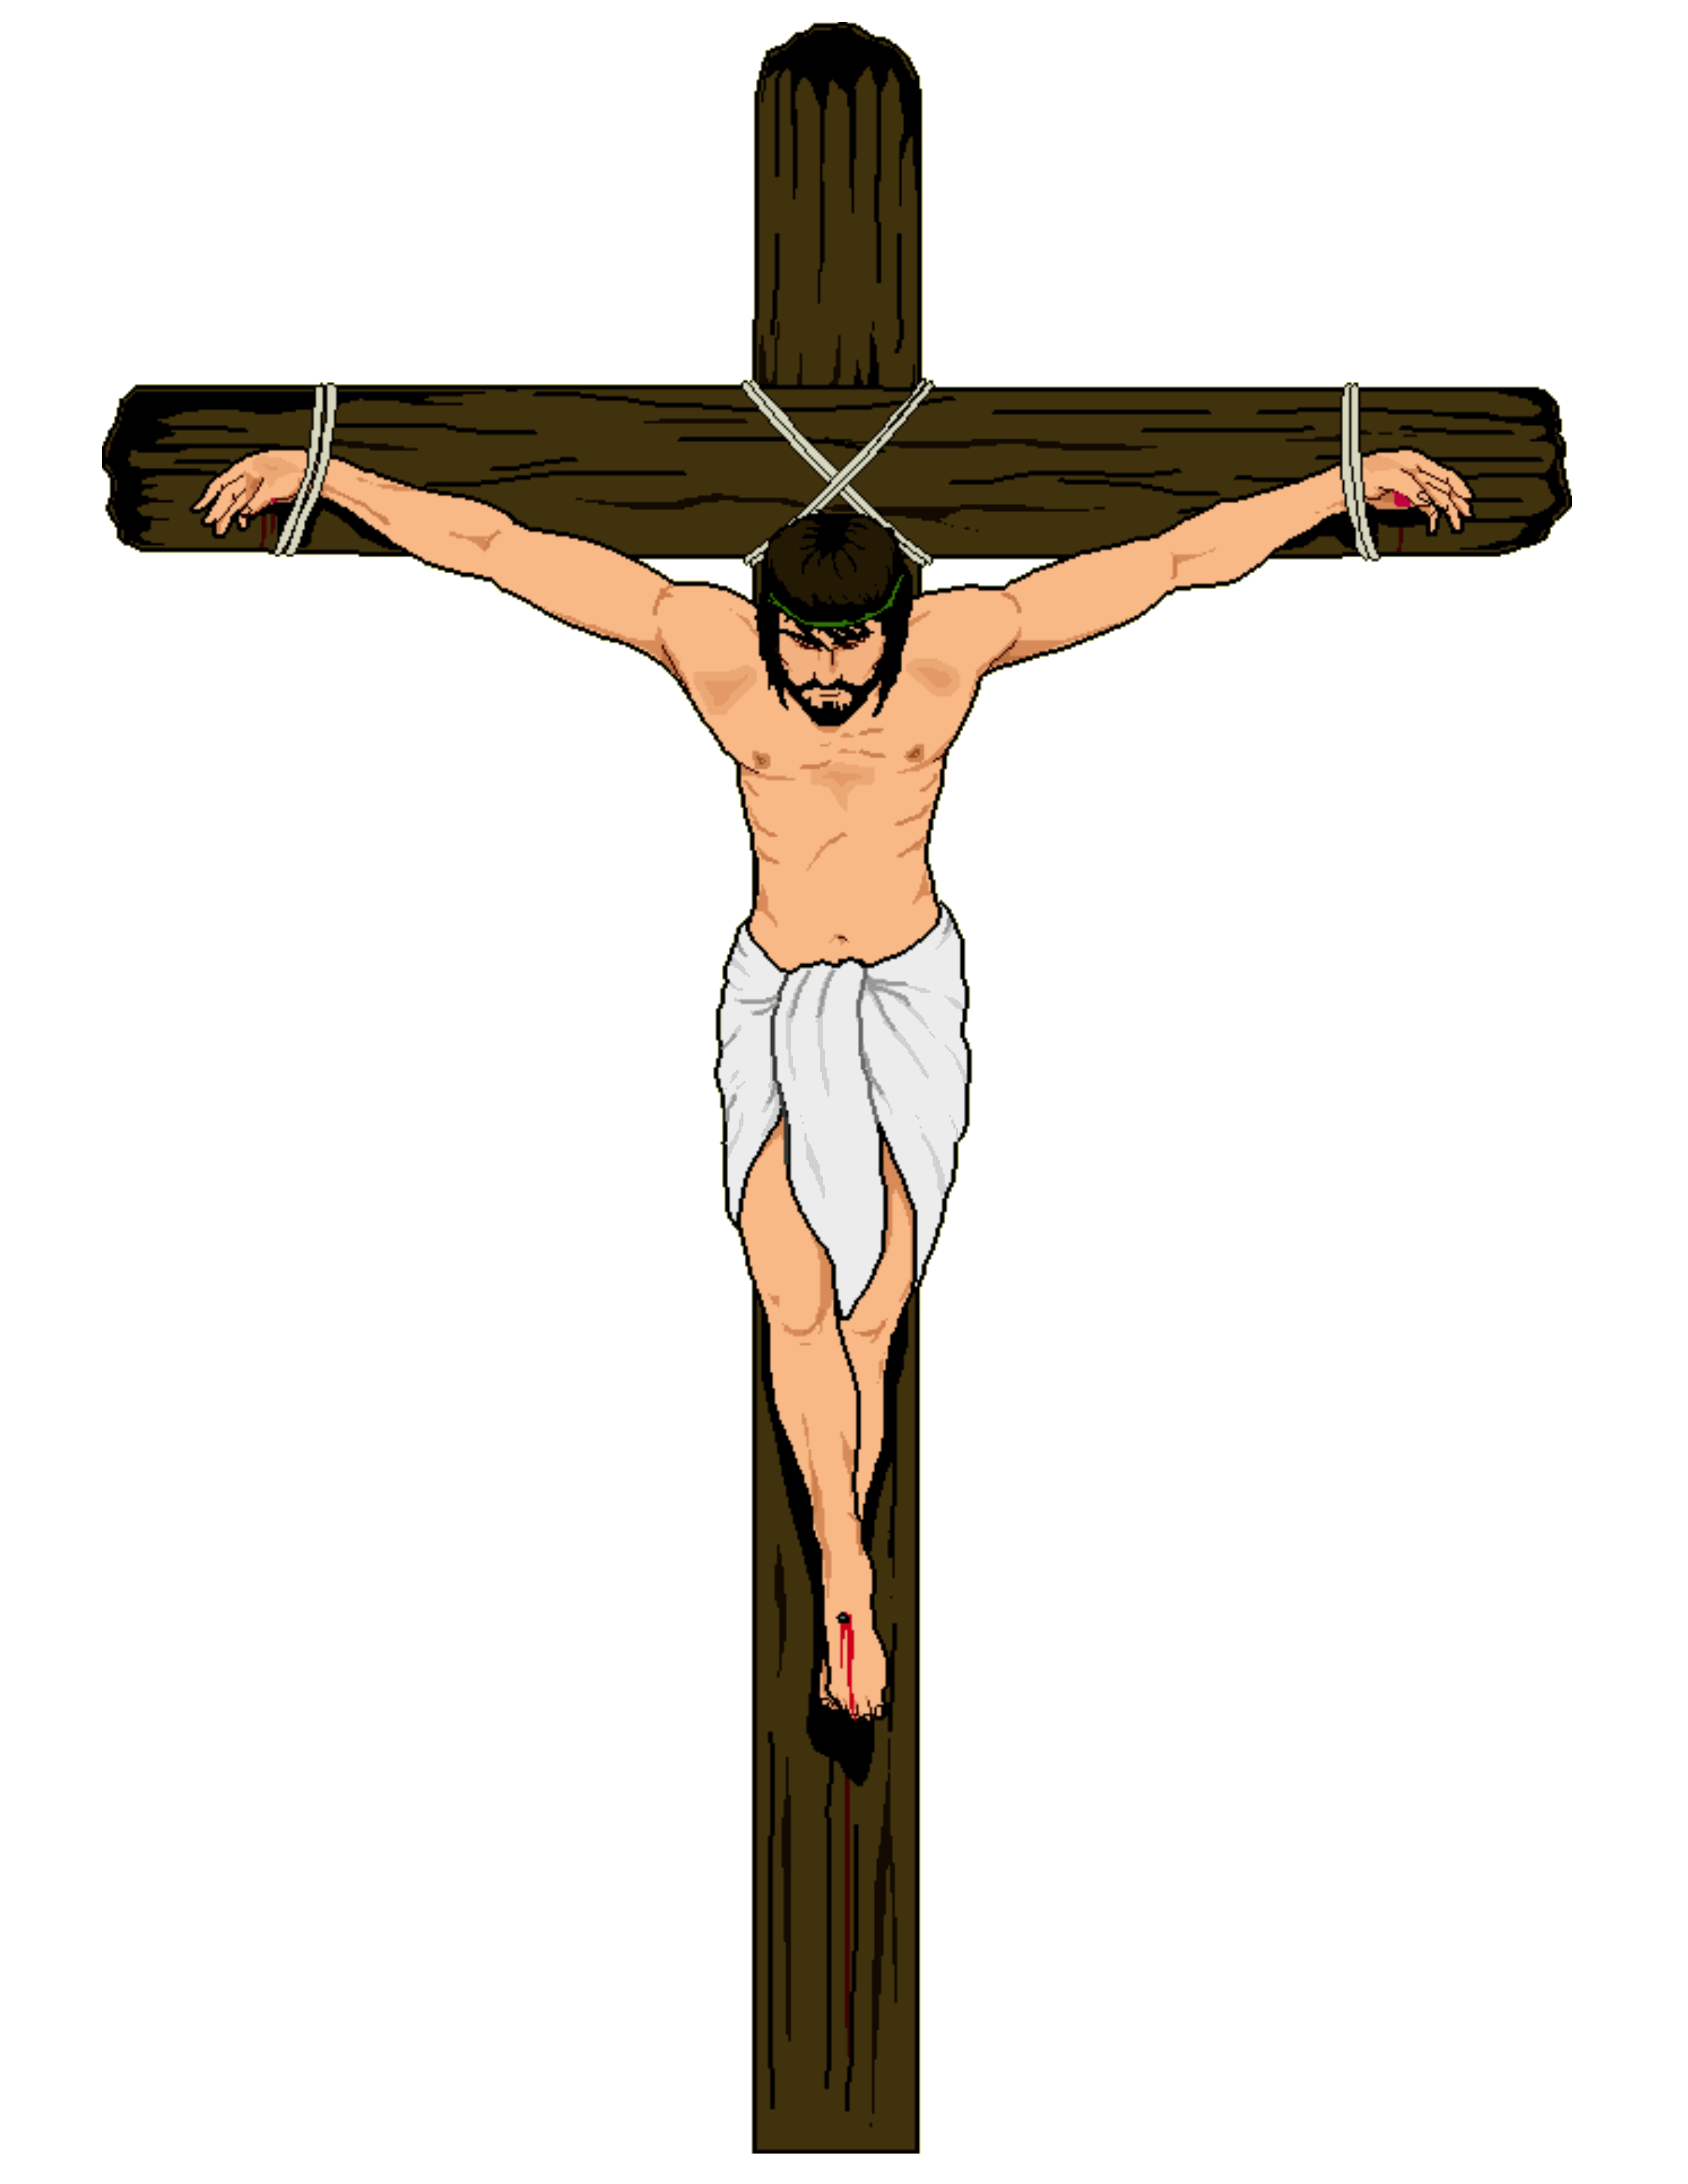 Crucifix clipart dies jesus, Crucifix dies jesus Transparent FREE for download on WebStockReview ...